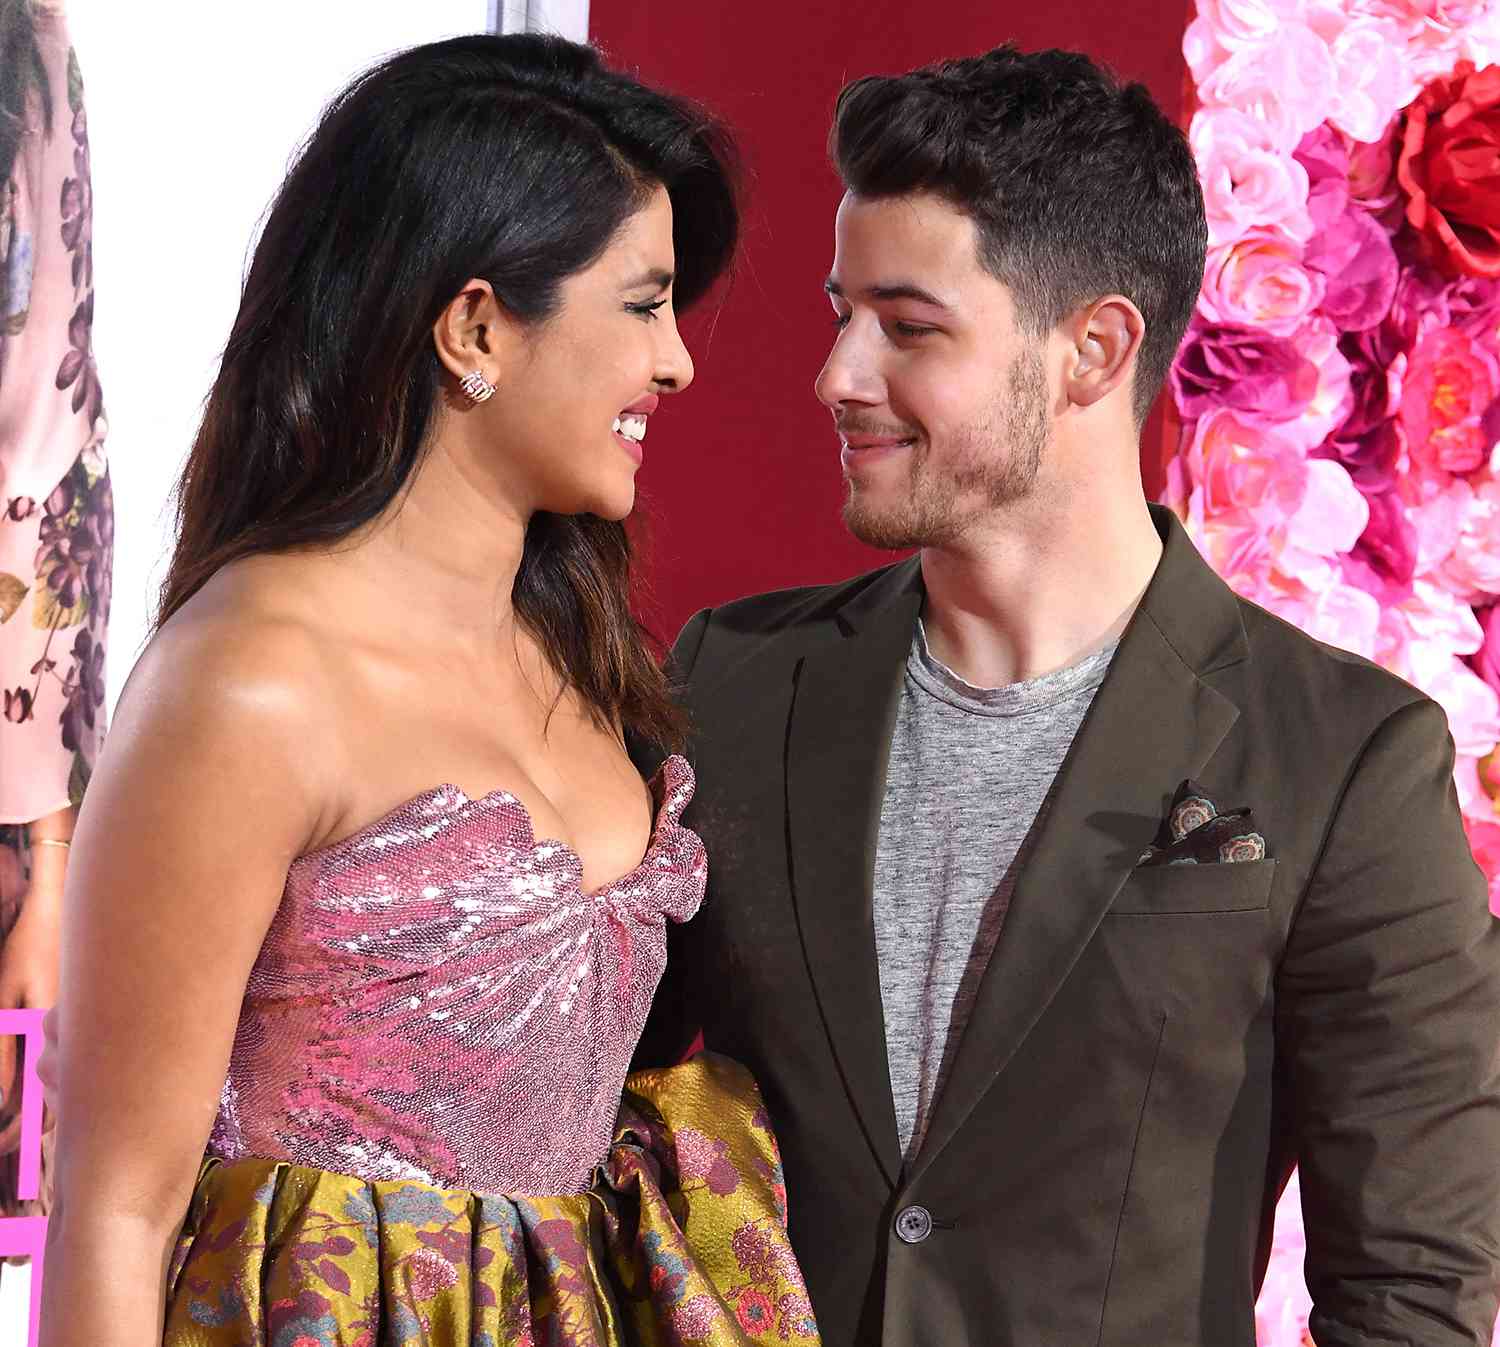 Nick Jonas and Priyanka Chopra Are ‘Excited’ to Be Parents: Source